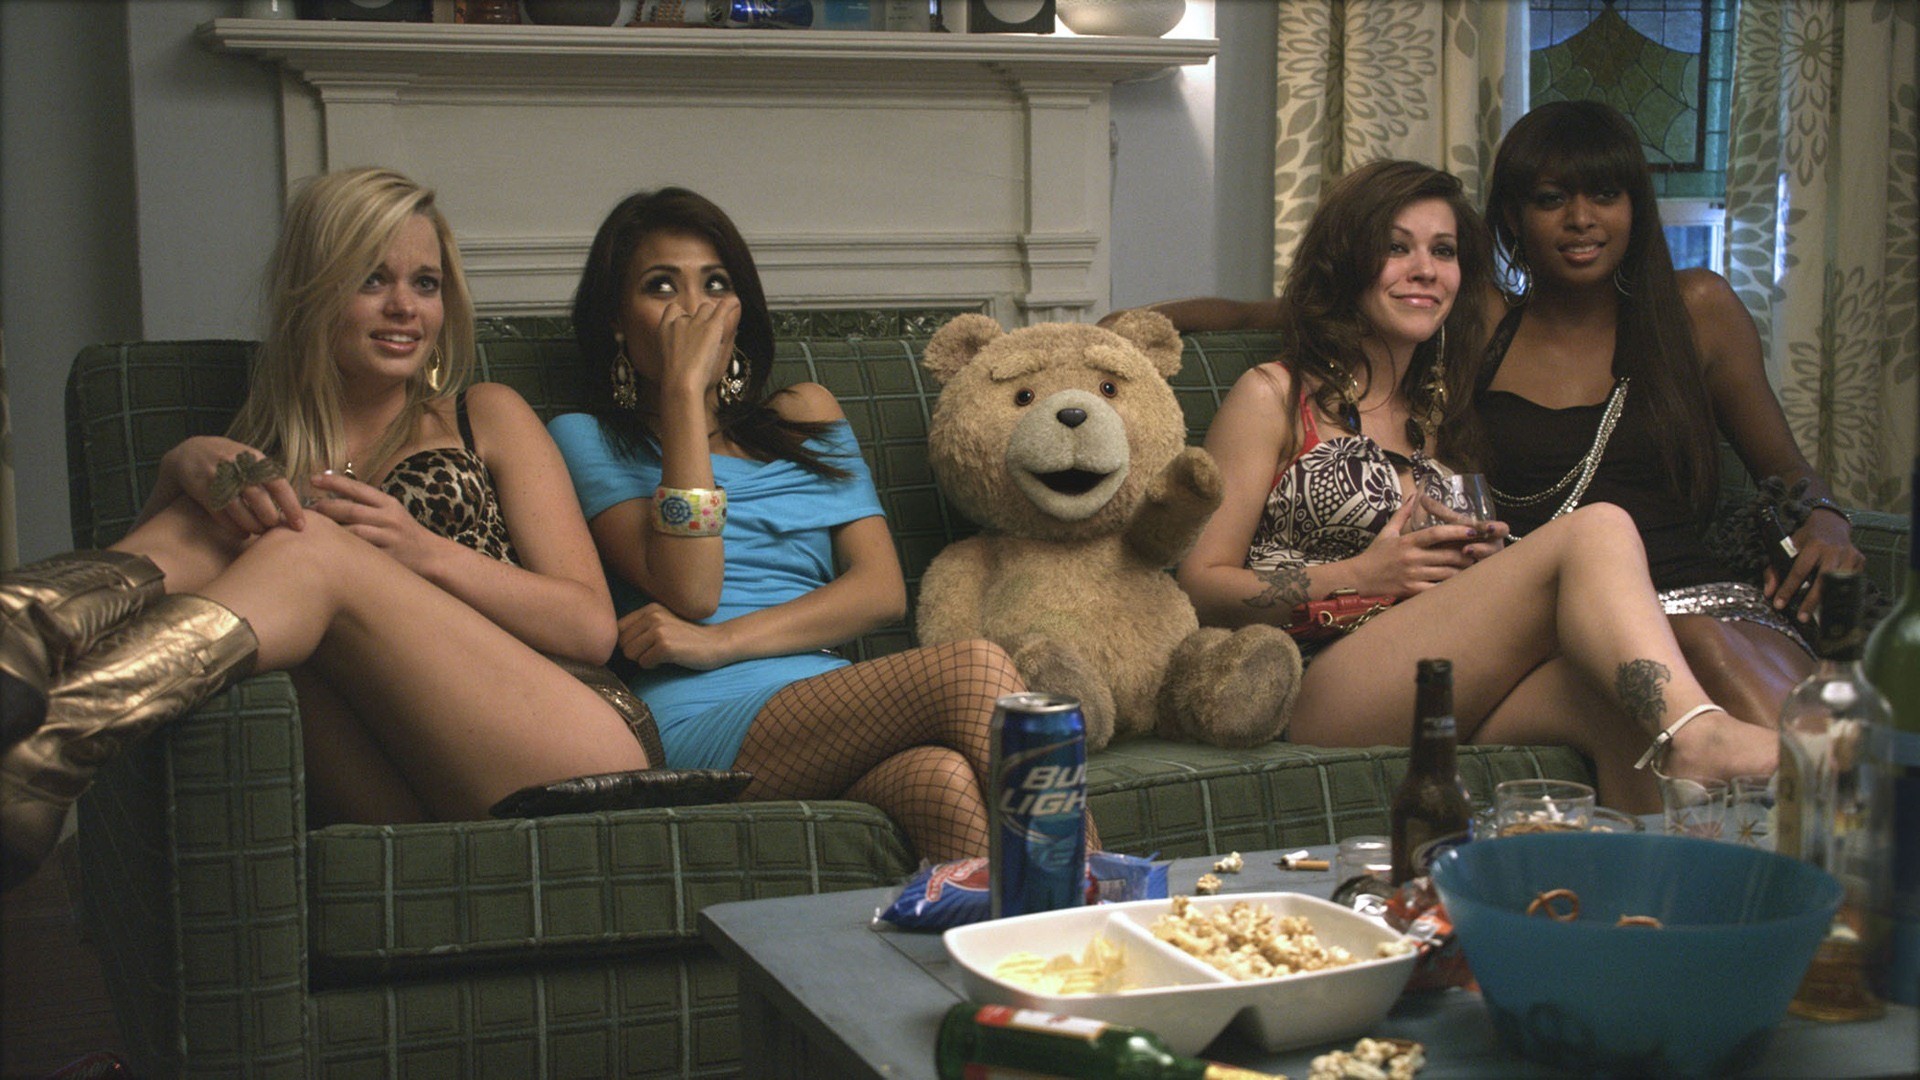 Teddy Bears Ted Movie Blonde Brunette Legs Beer Movies Couch 2012 Year 1920x1080